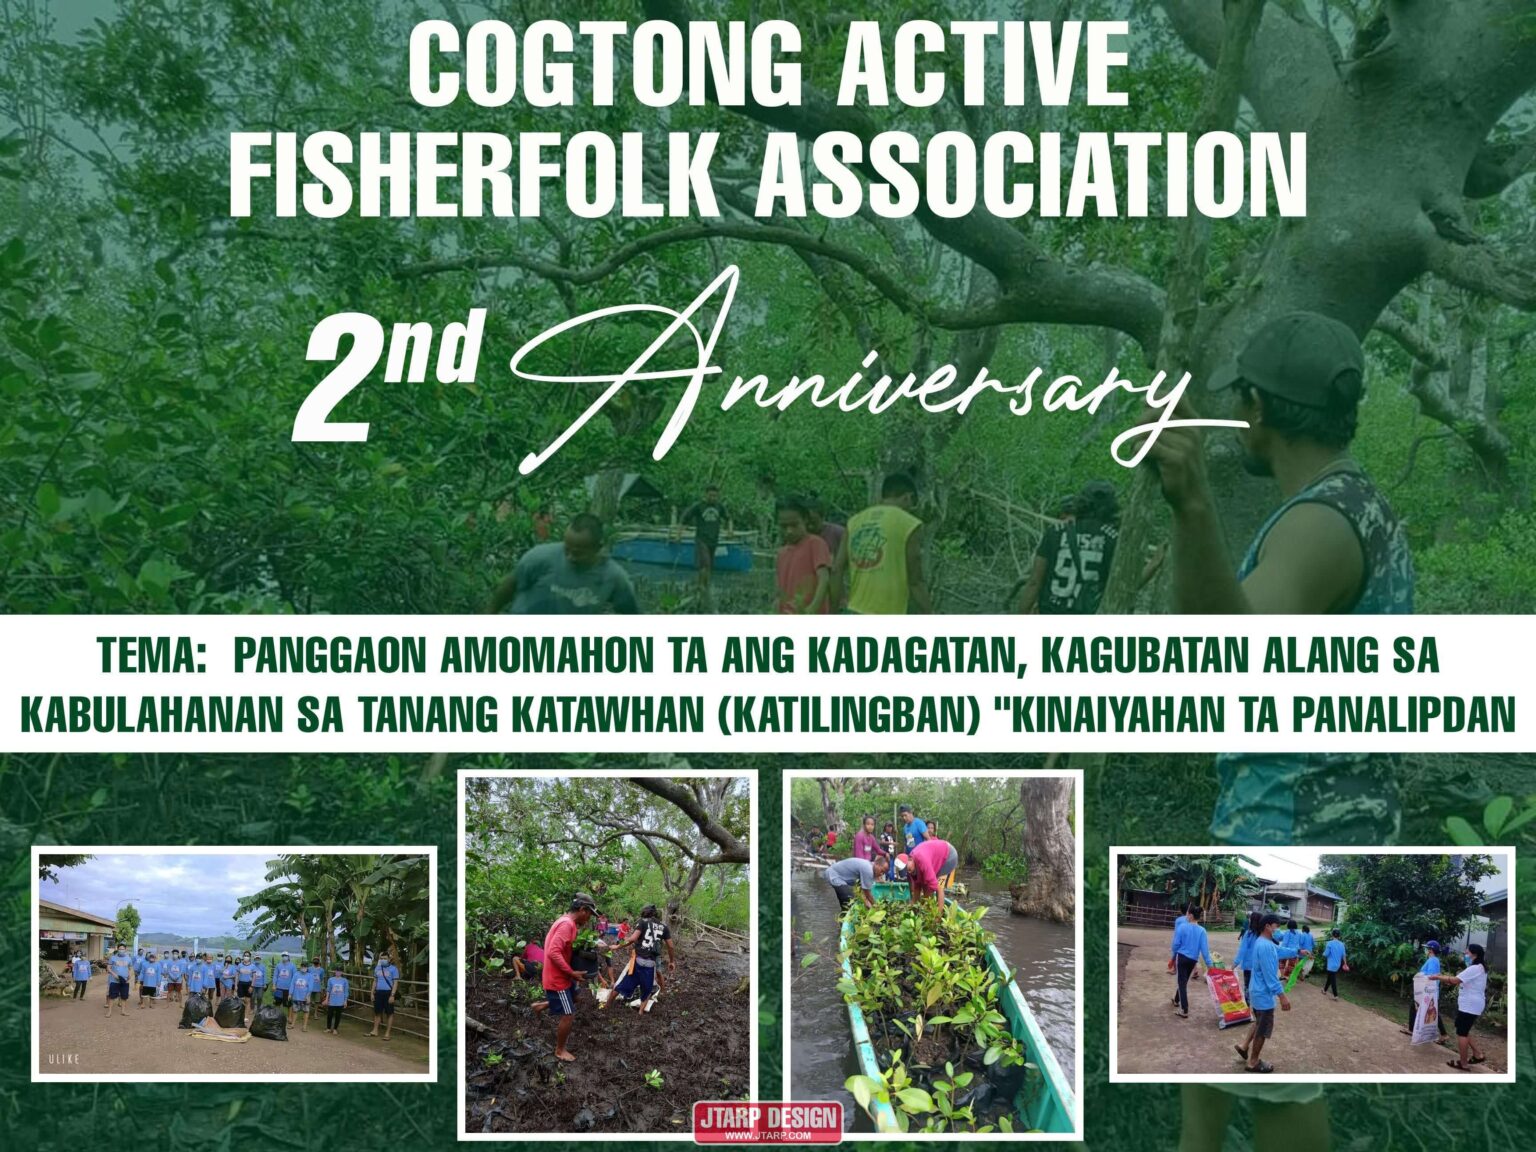 4x8 COGTONG ACTIVE FISHERFOLK ASSOCIATION 2nd Anniversary